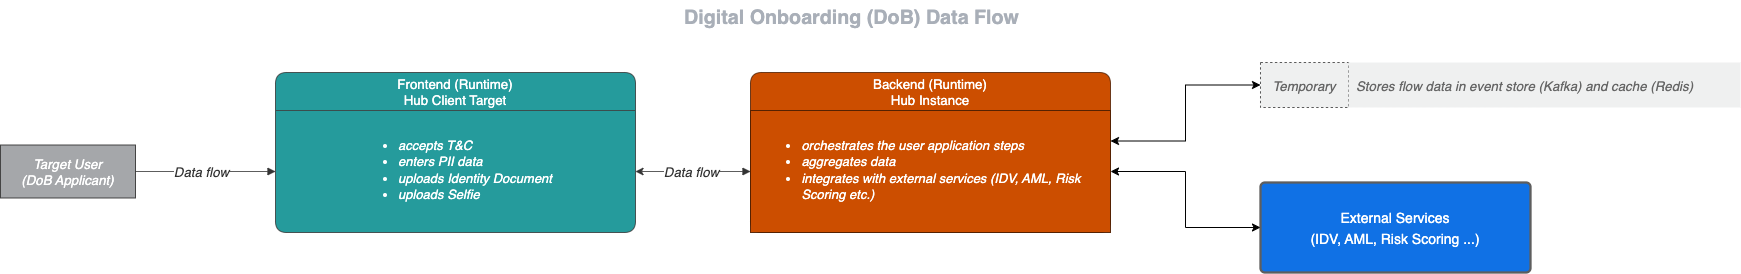 Digital Onboarding (DoB) Data Flow.drawio.png